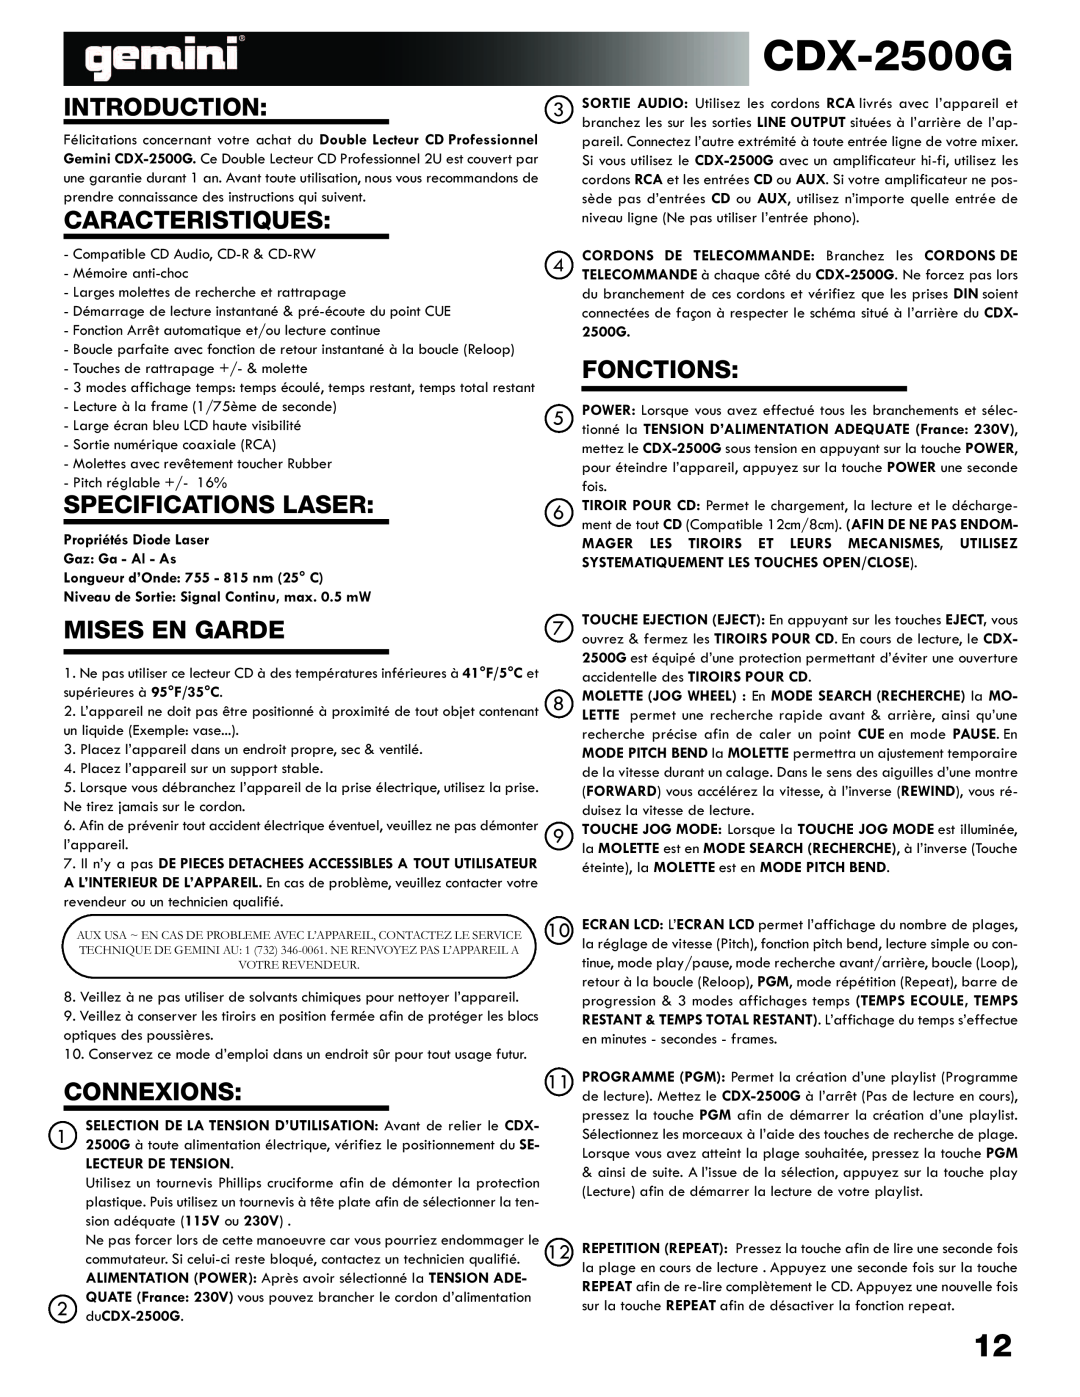 Gemini CDX-2500G manual Caracteristiques, Specifications Laser, Mises En Garde, Connexions, Fonctions, Introduction 